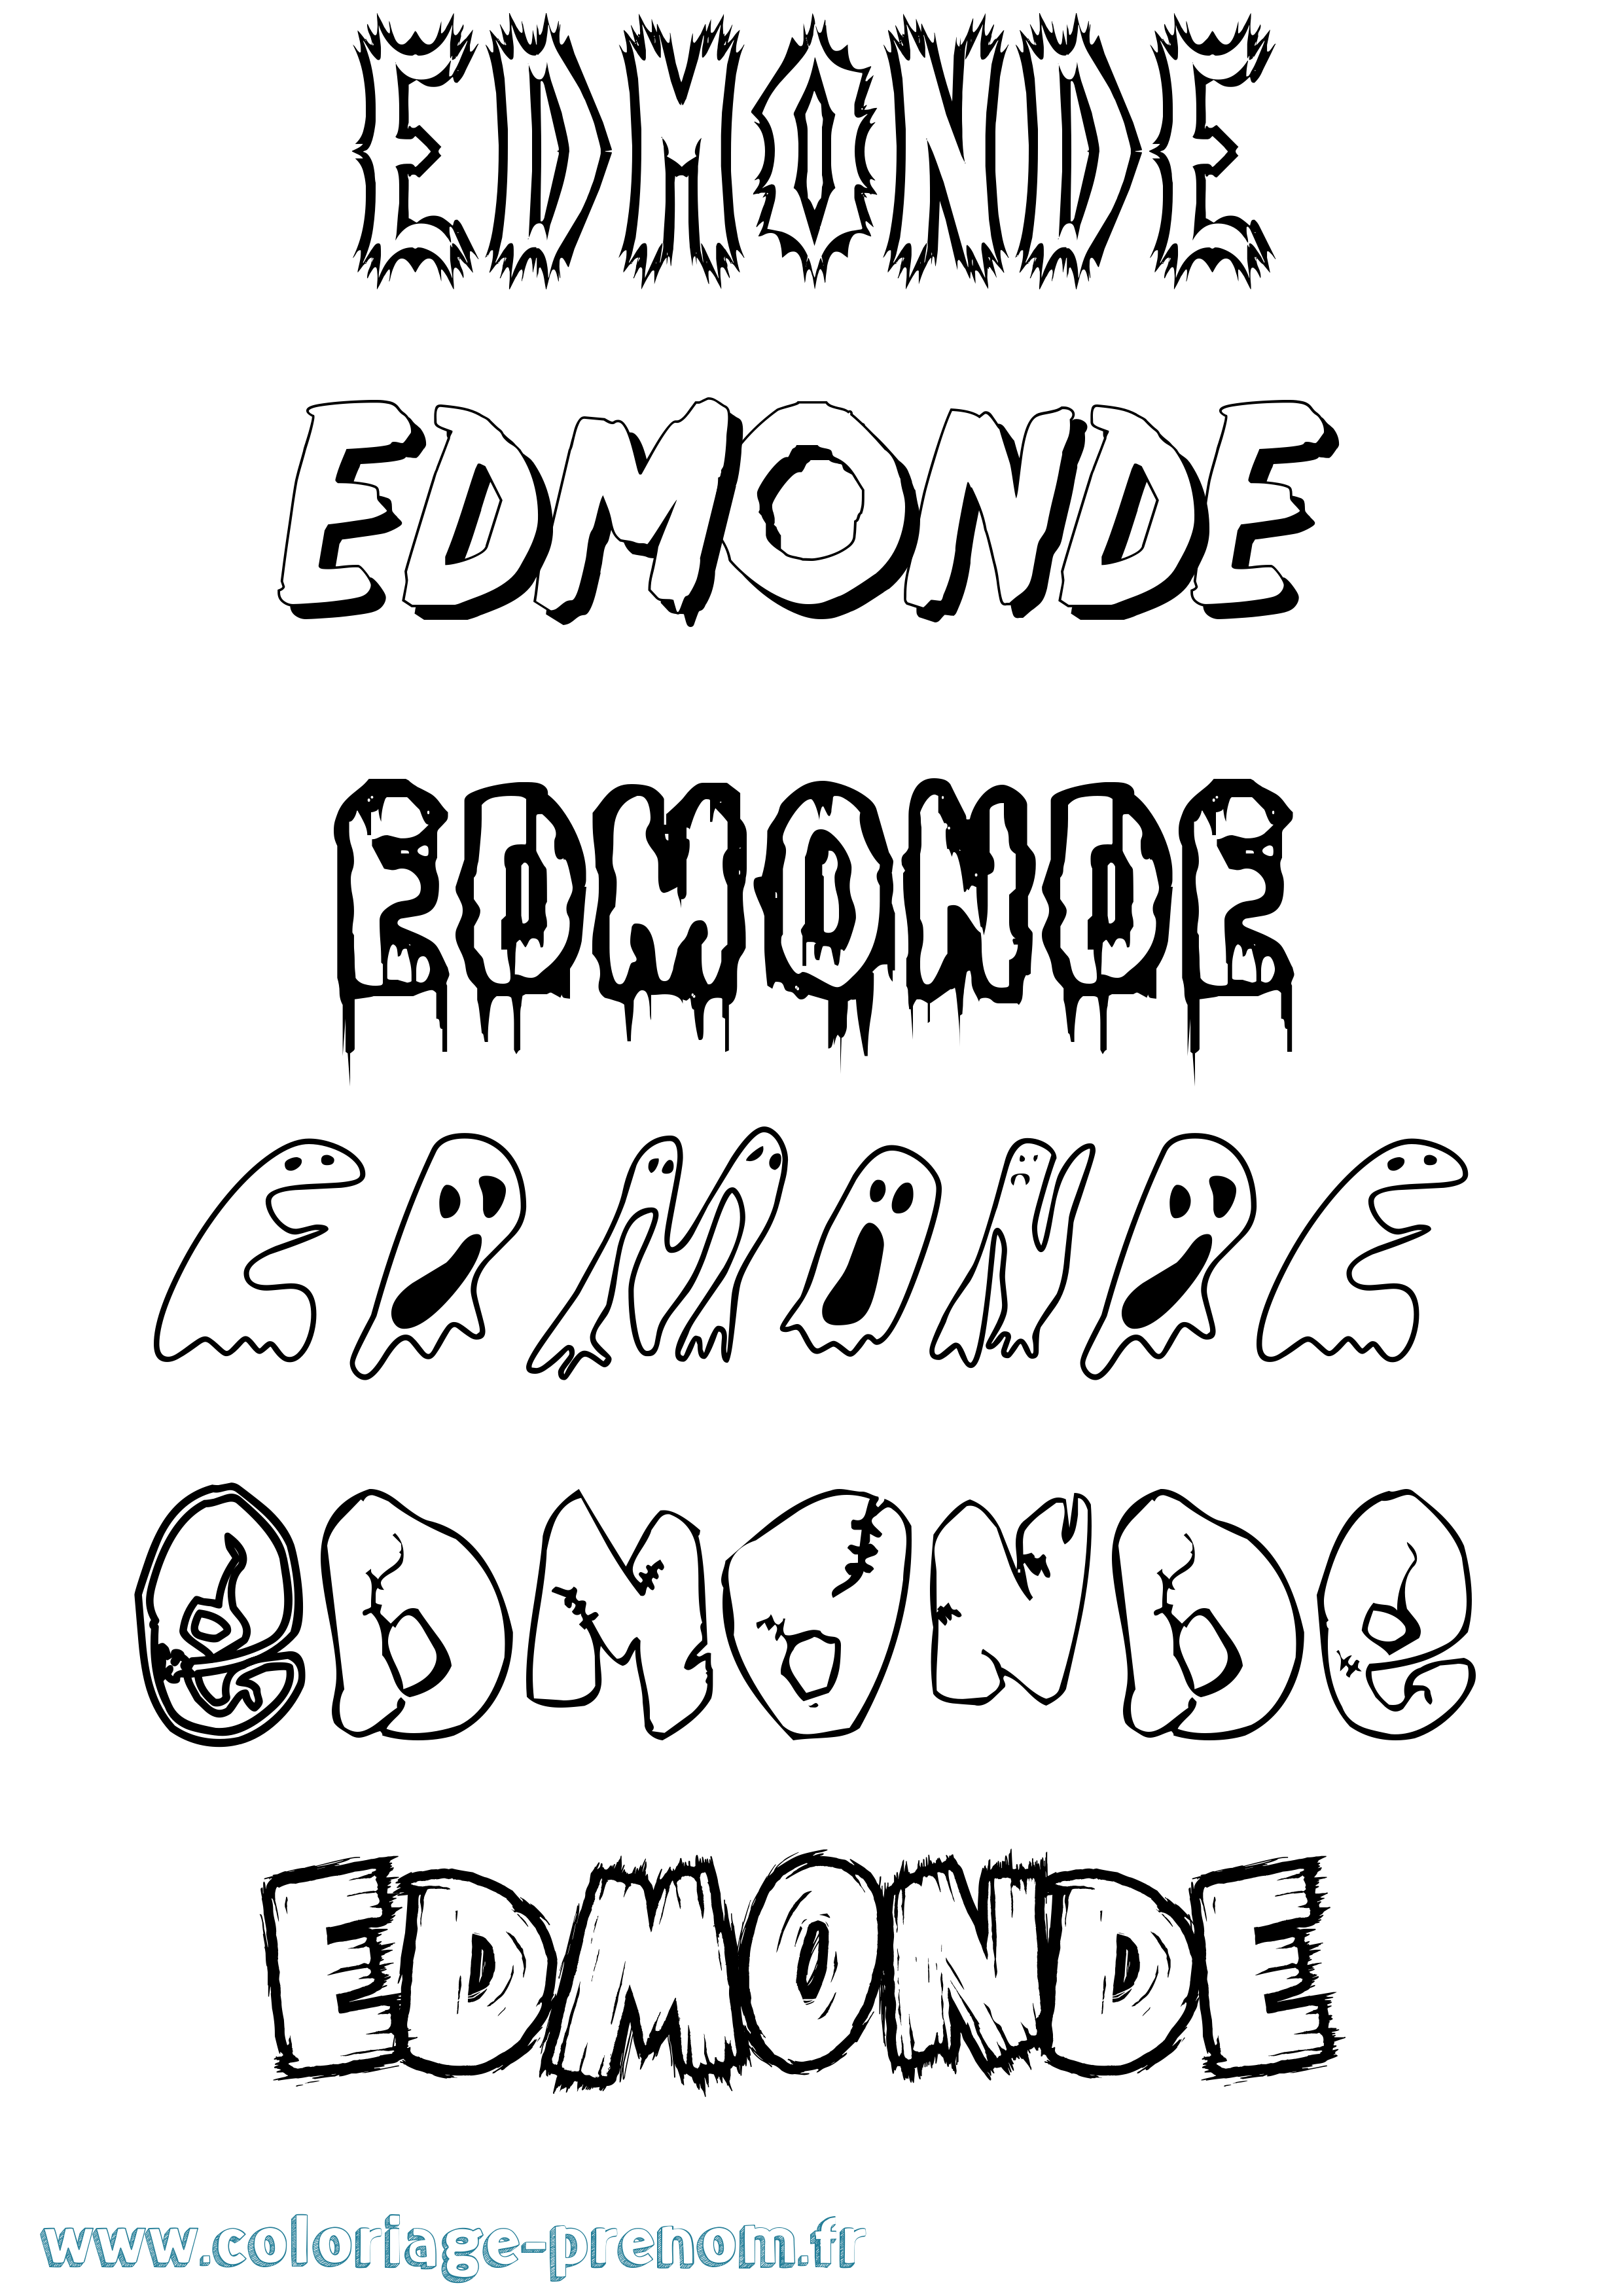 Coloriage prénom Edmonde Frisson